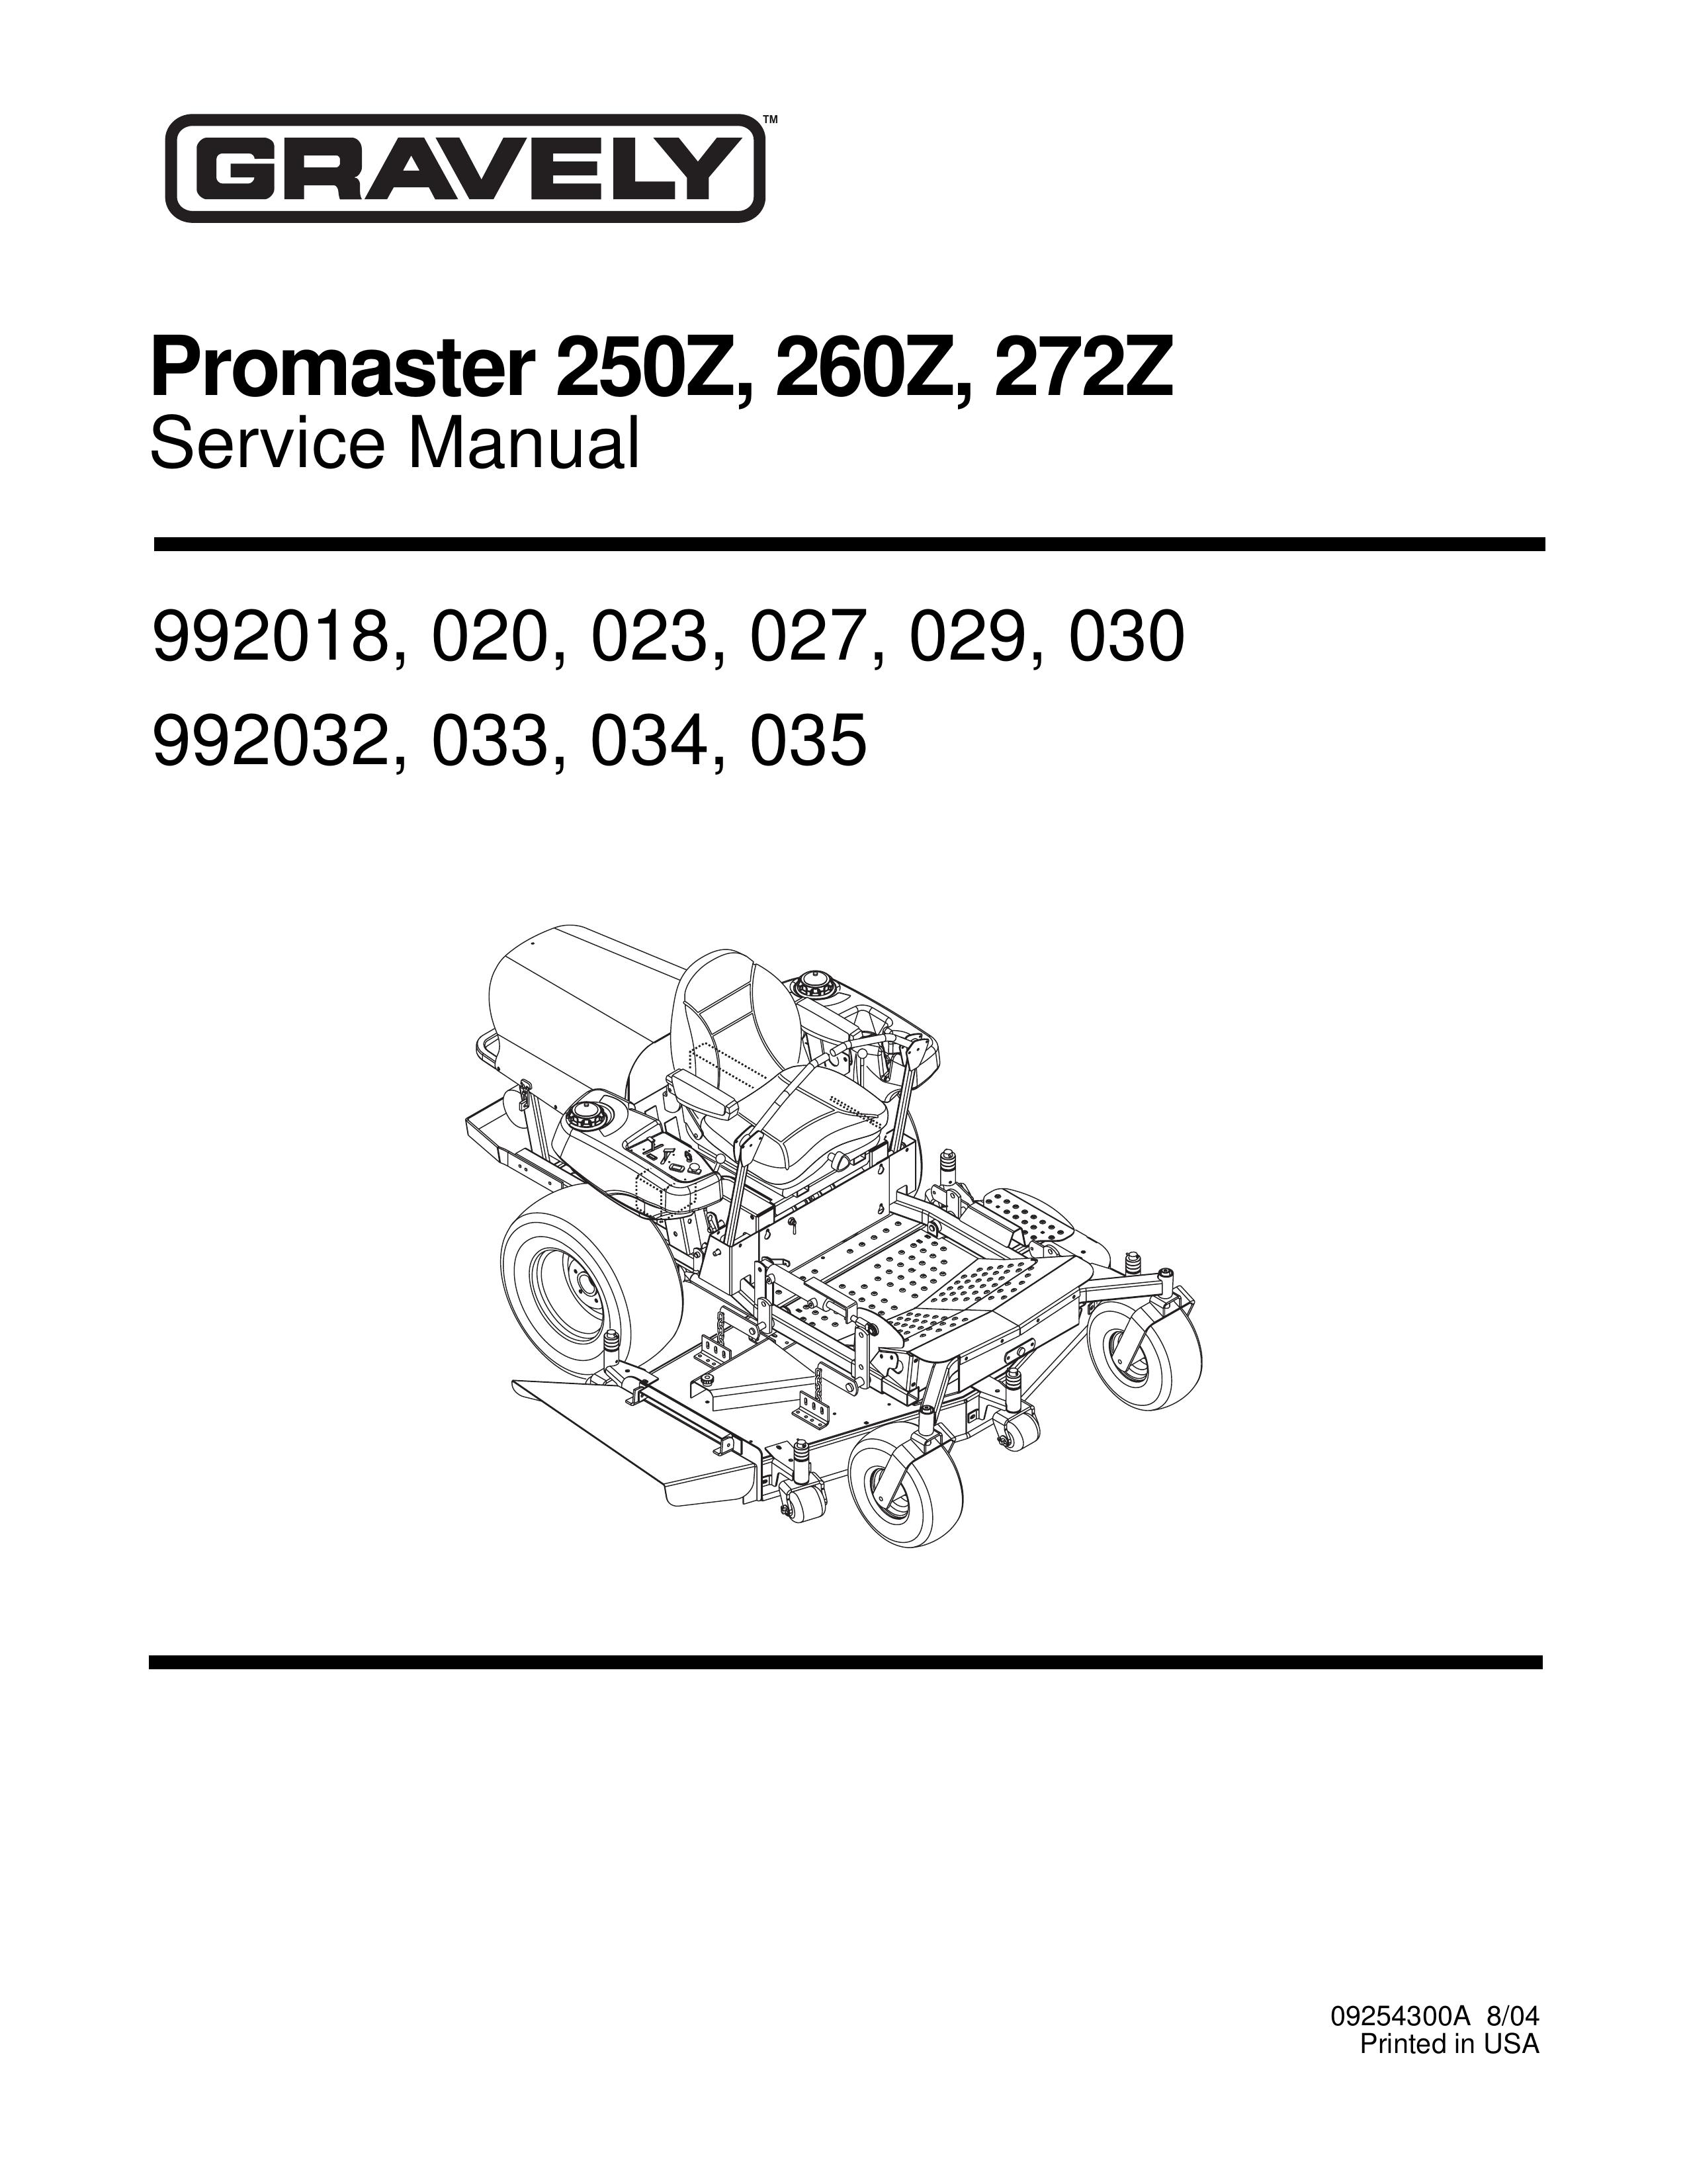 Gravely 272Z Lawn Mower User Manual